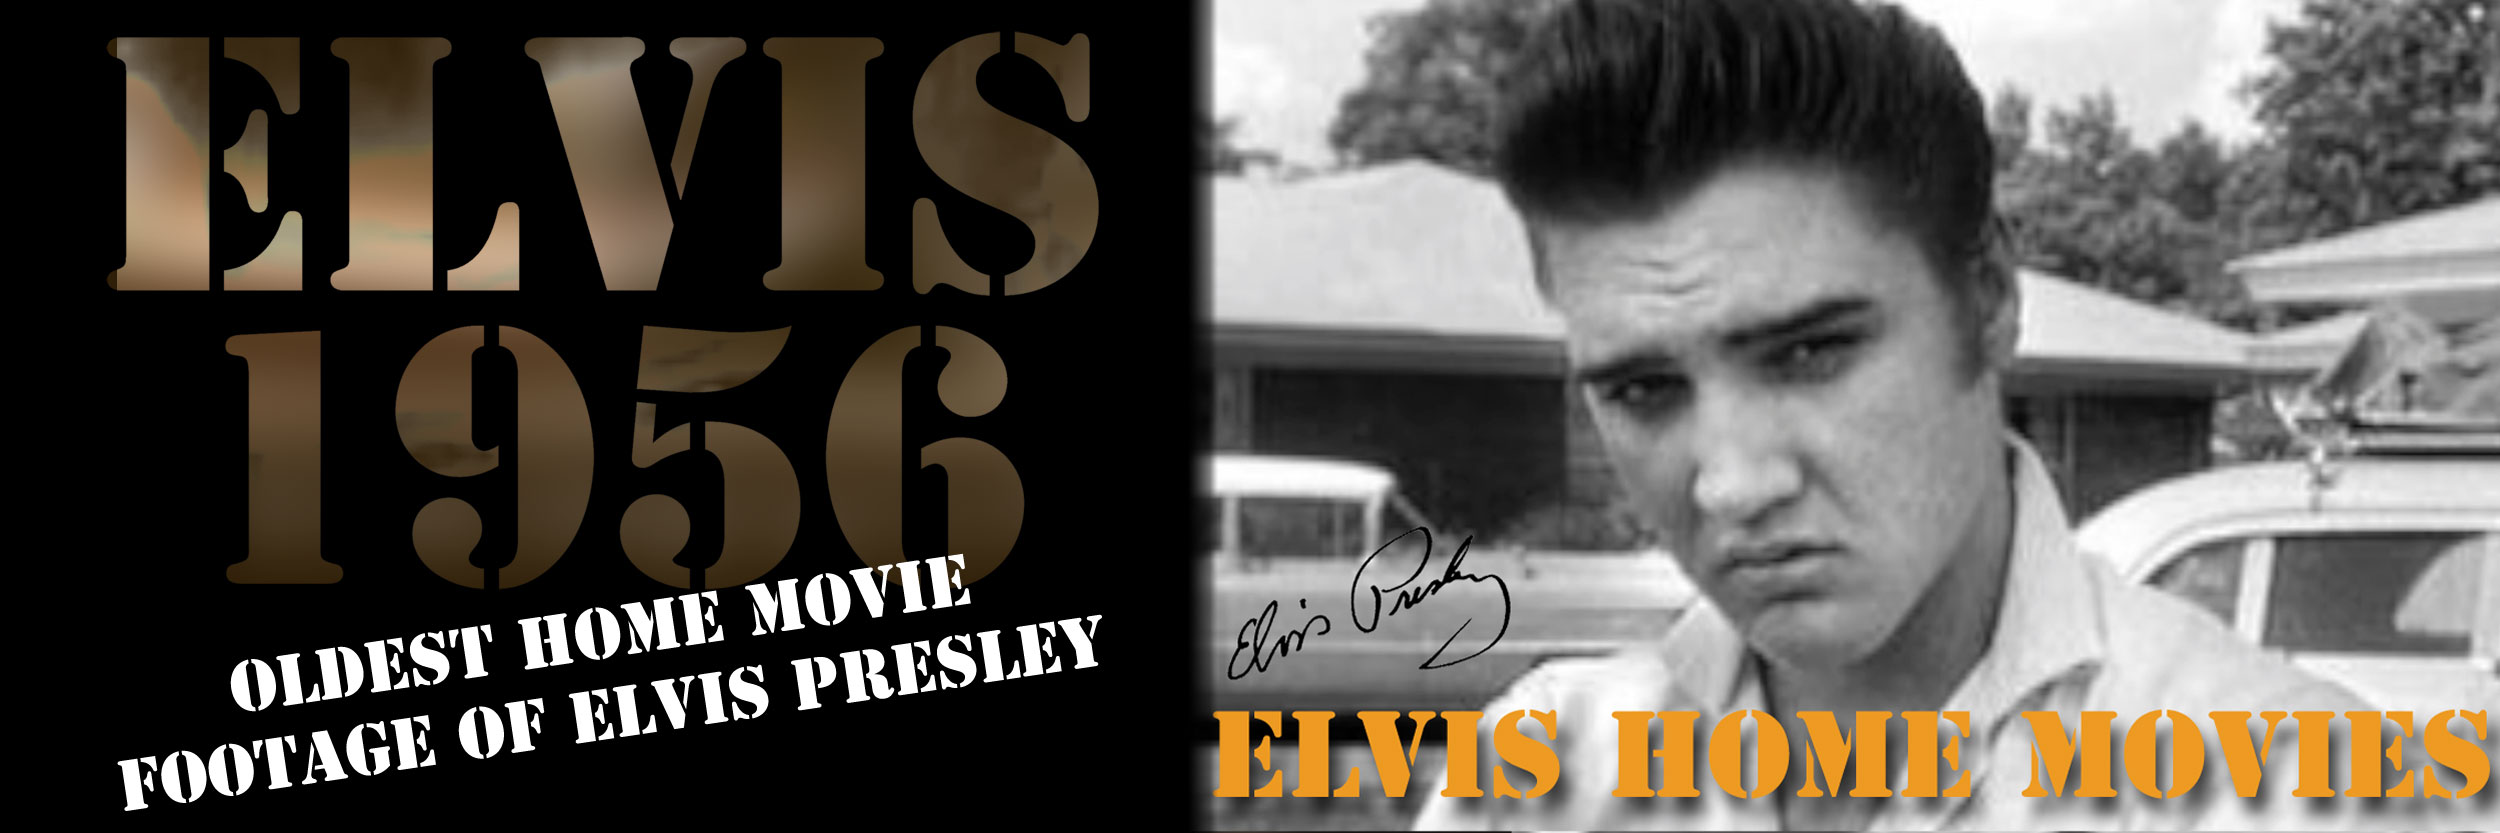 Elvis Home Movies Slider